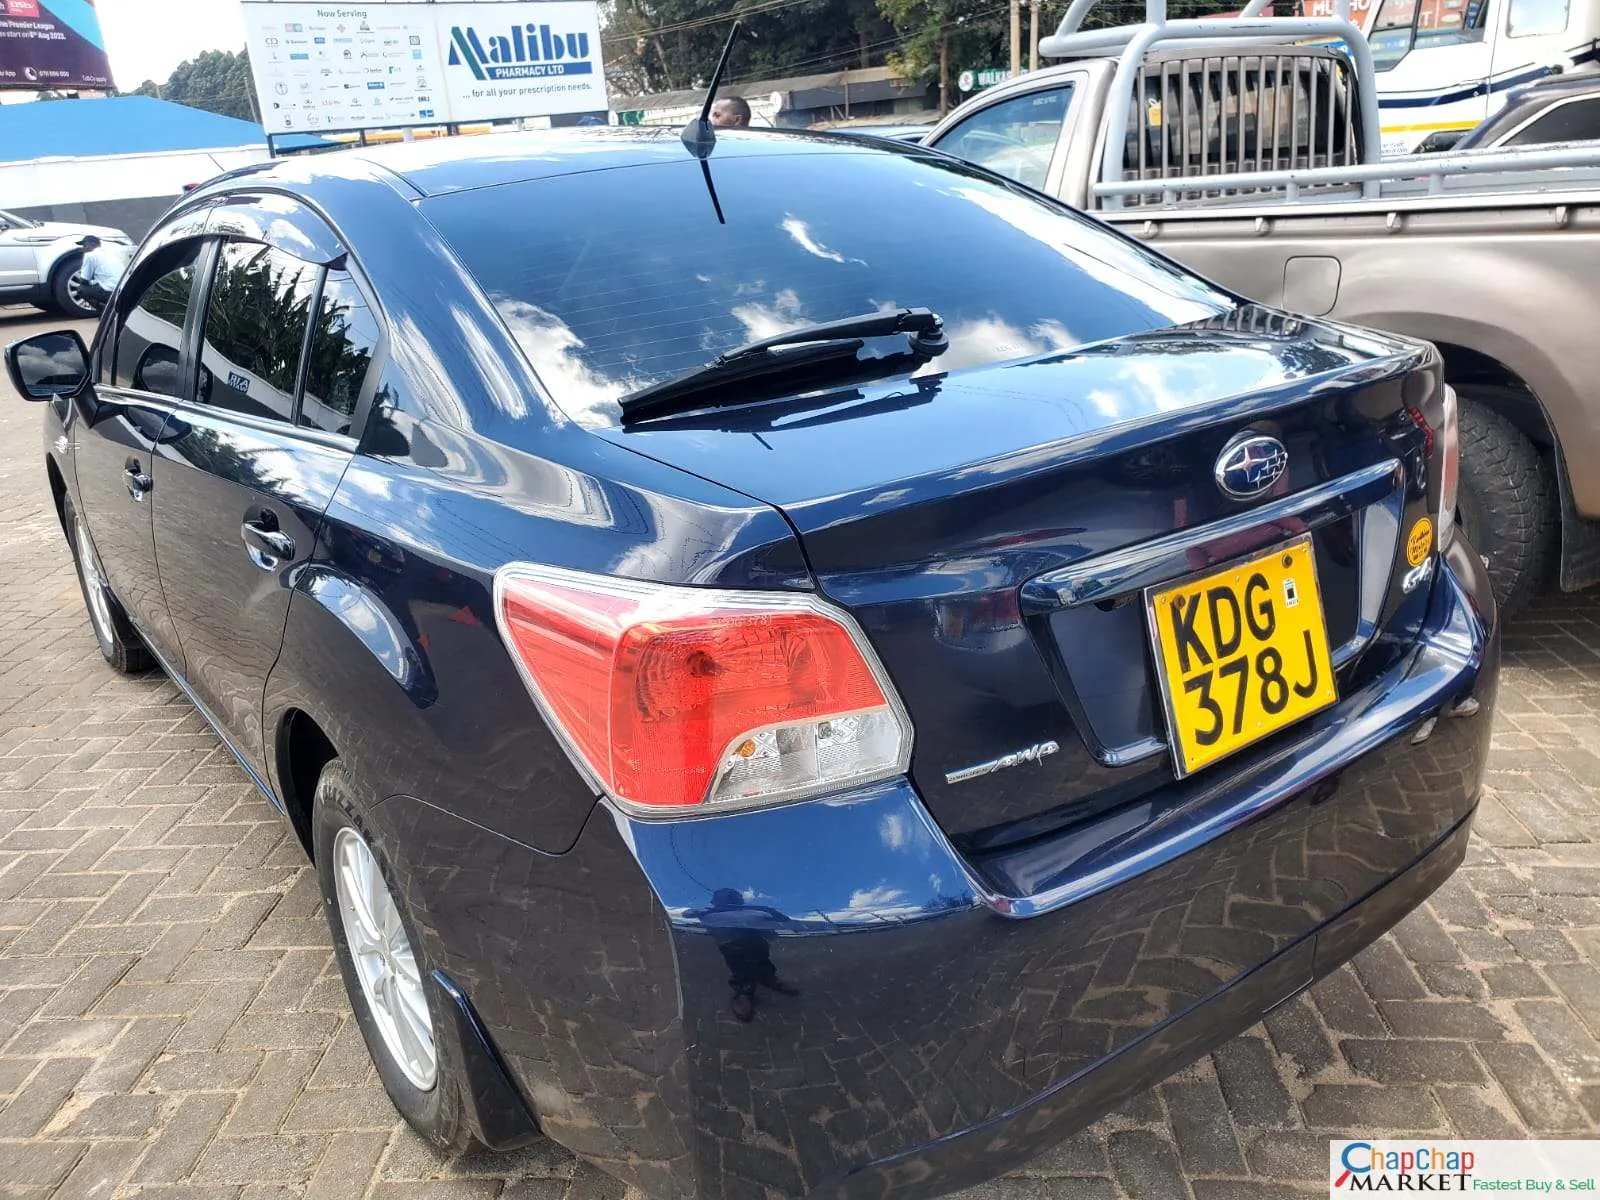 Subaru Impreza G4 QUICK SALE You Pay 30% deposit Trade in Ok Impreza for sale in kenya hire purchase installments EXCLUSIVE